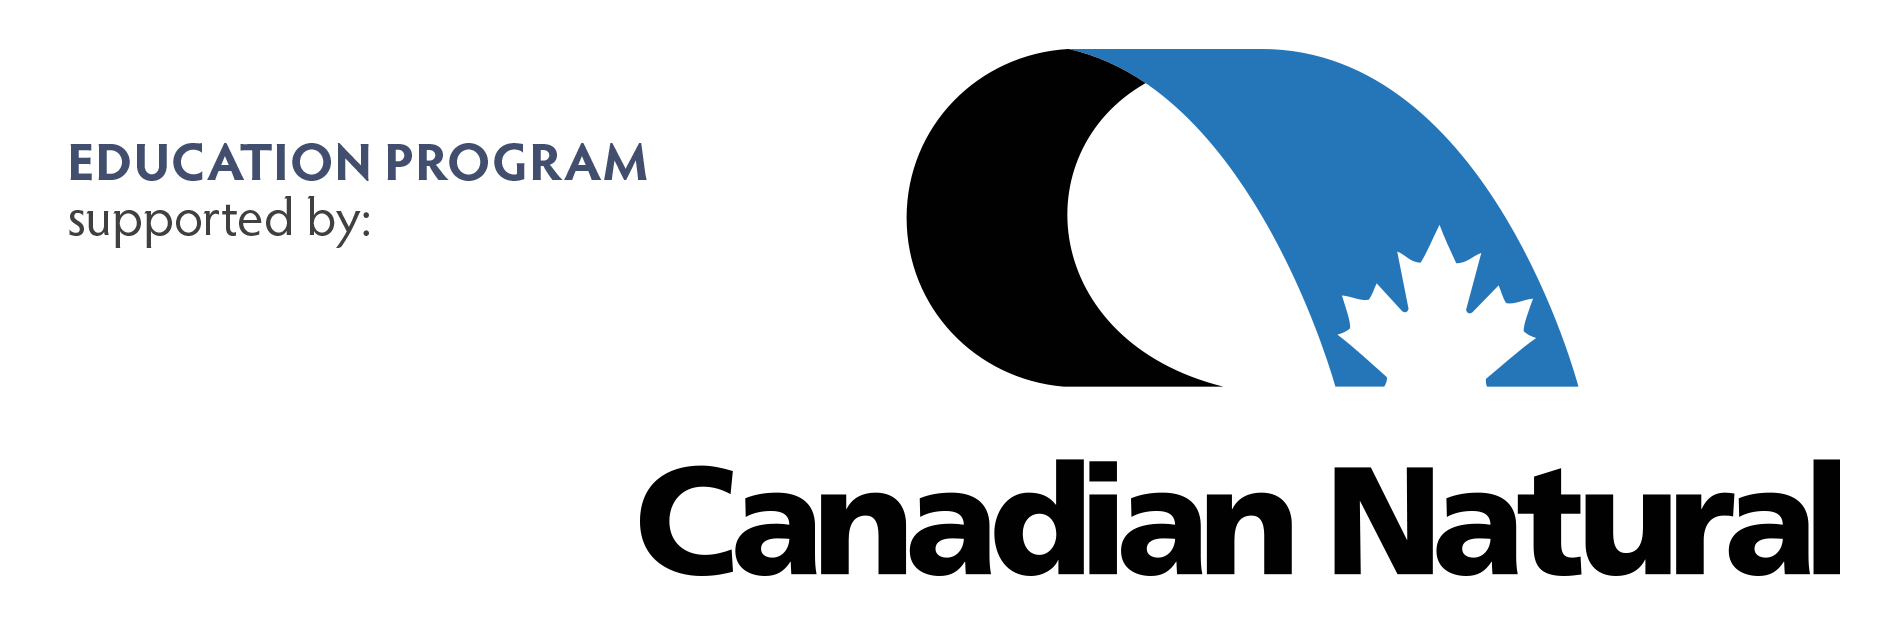 CNRL company logo